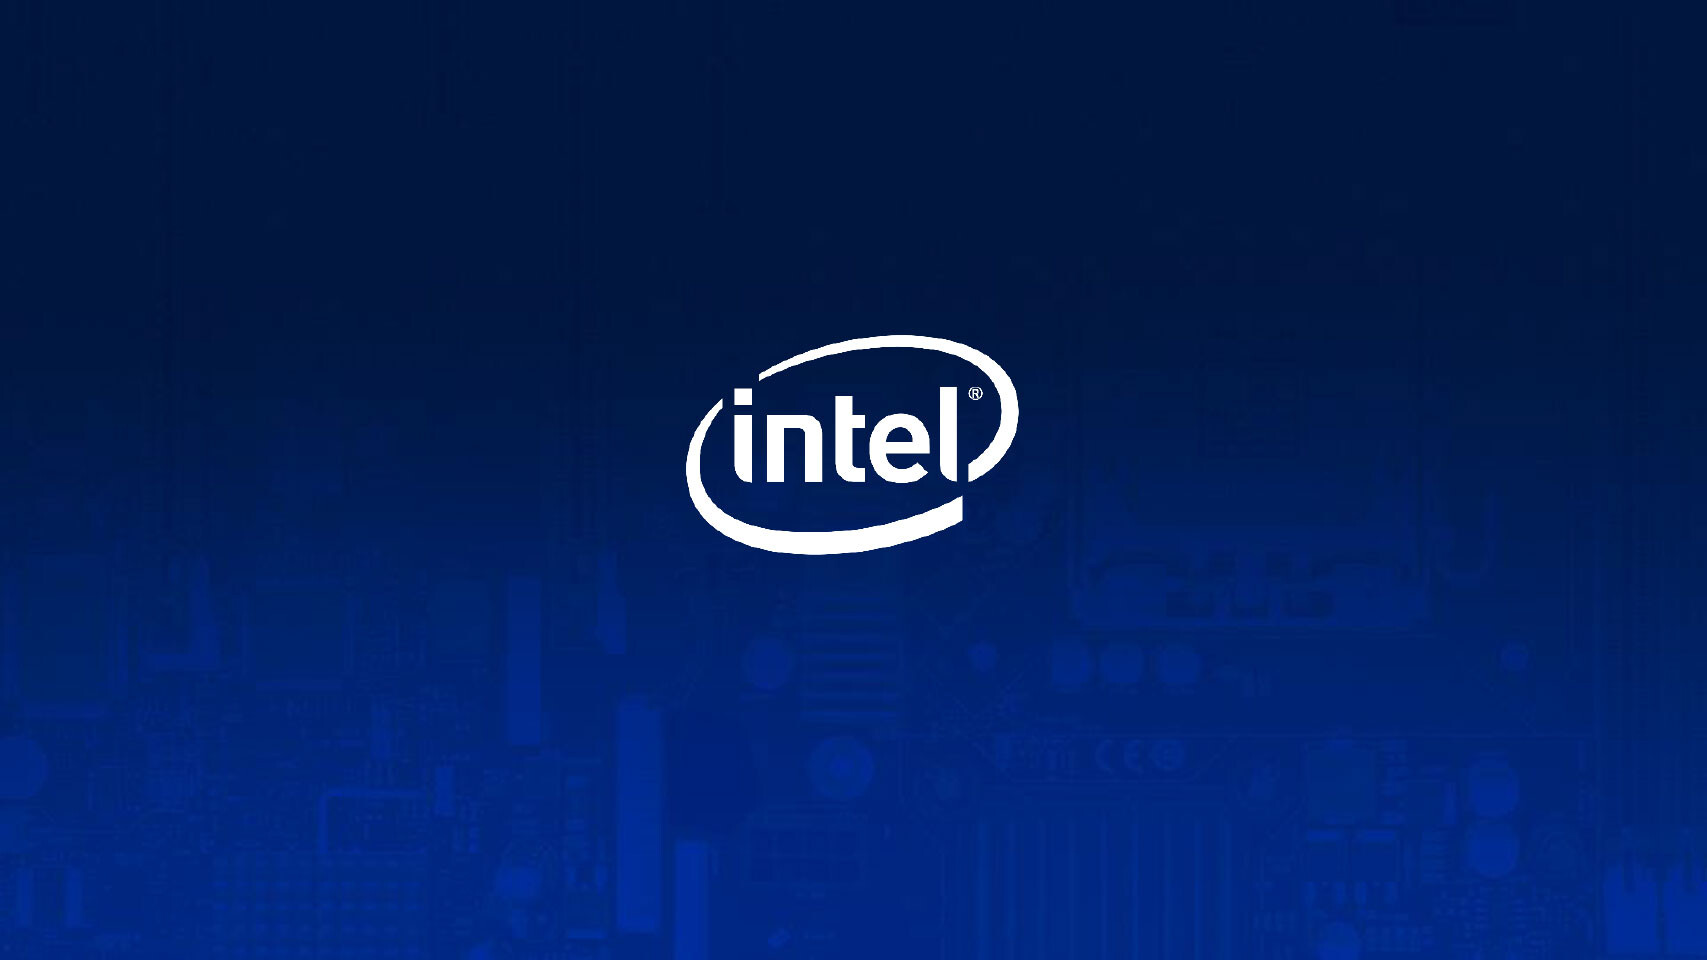 Звук интел. Обои Intel Core i5. Логотип Intel. Intel обложка. Слоган Интел.